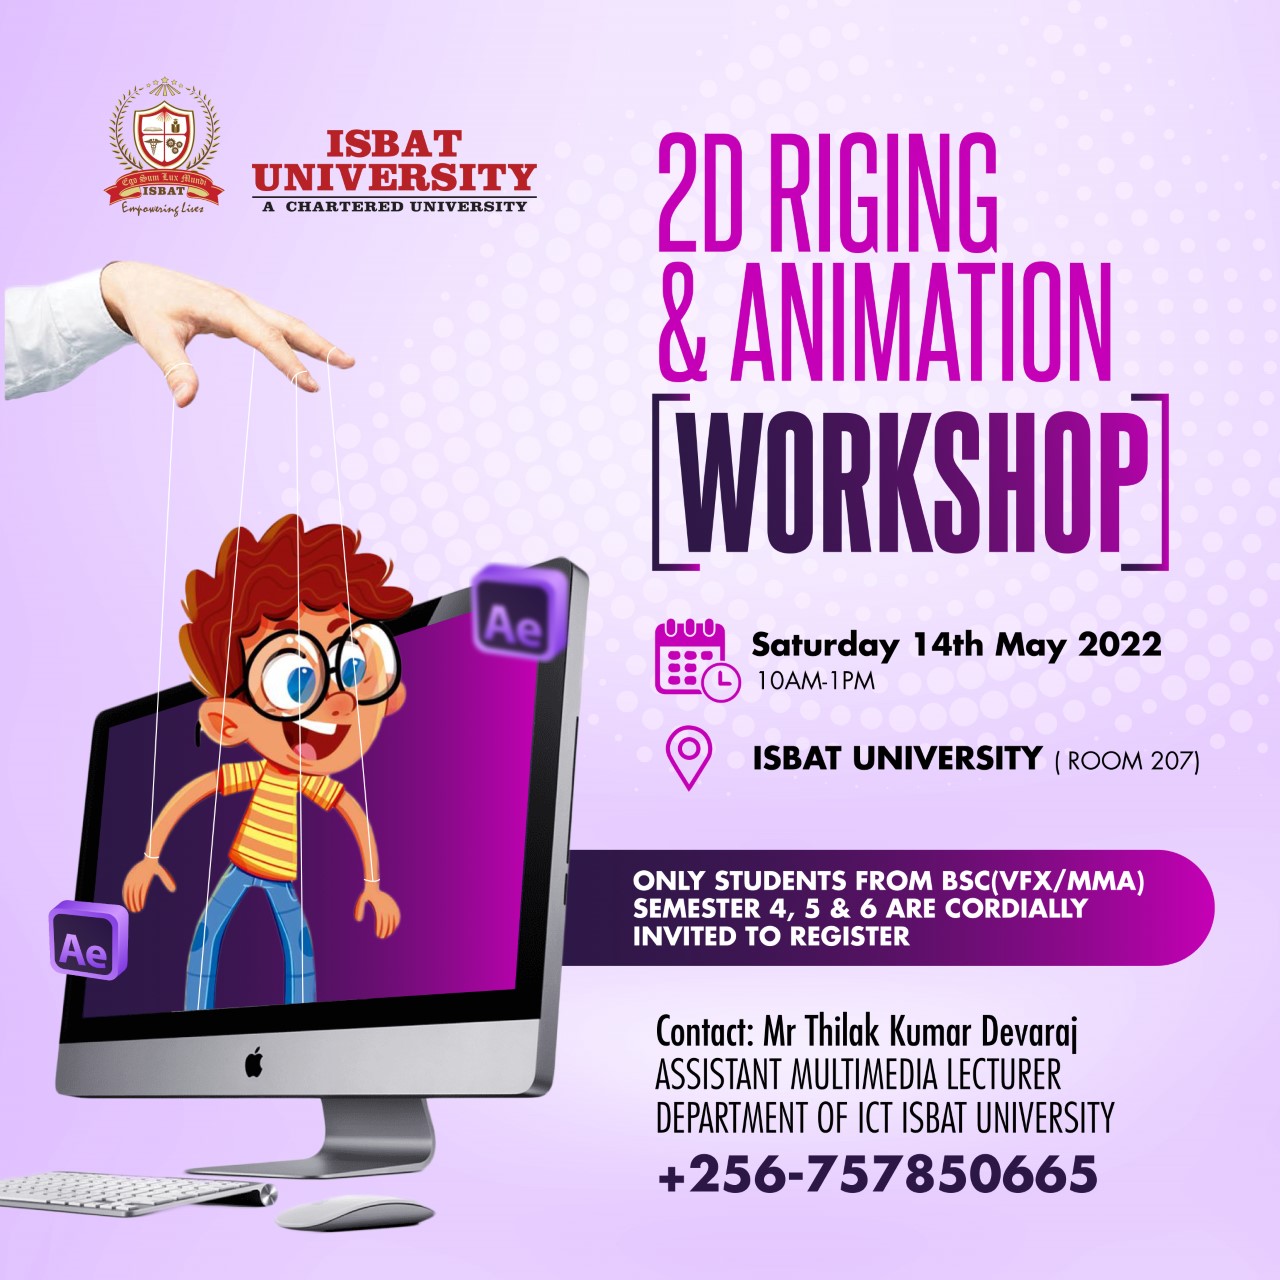 2D Rigging & Animation workshop - ISBAT University